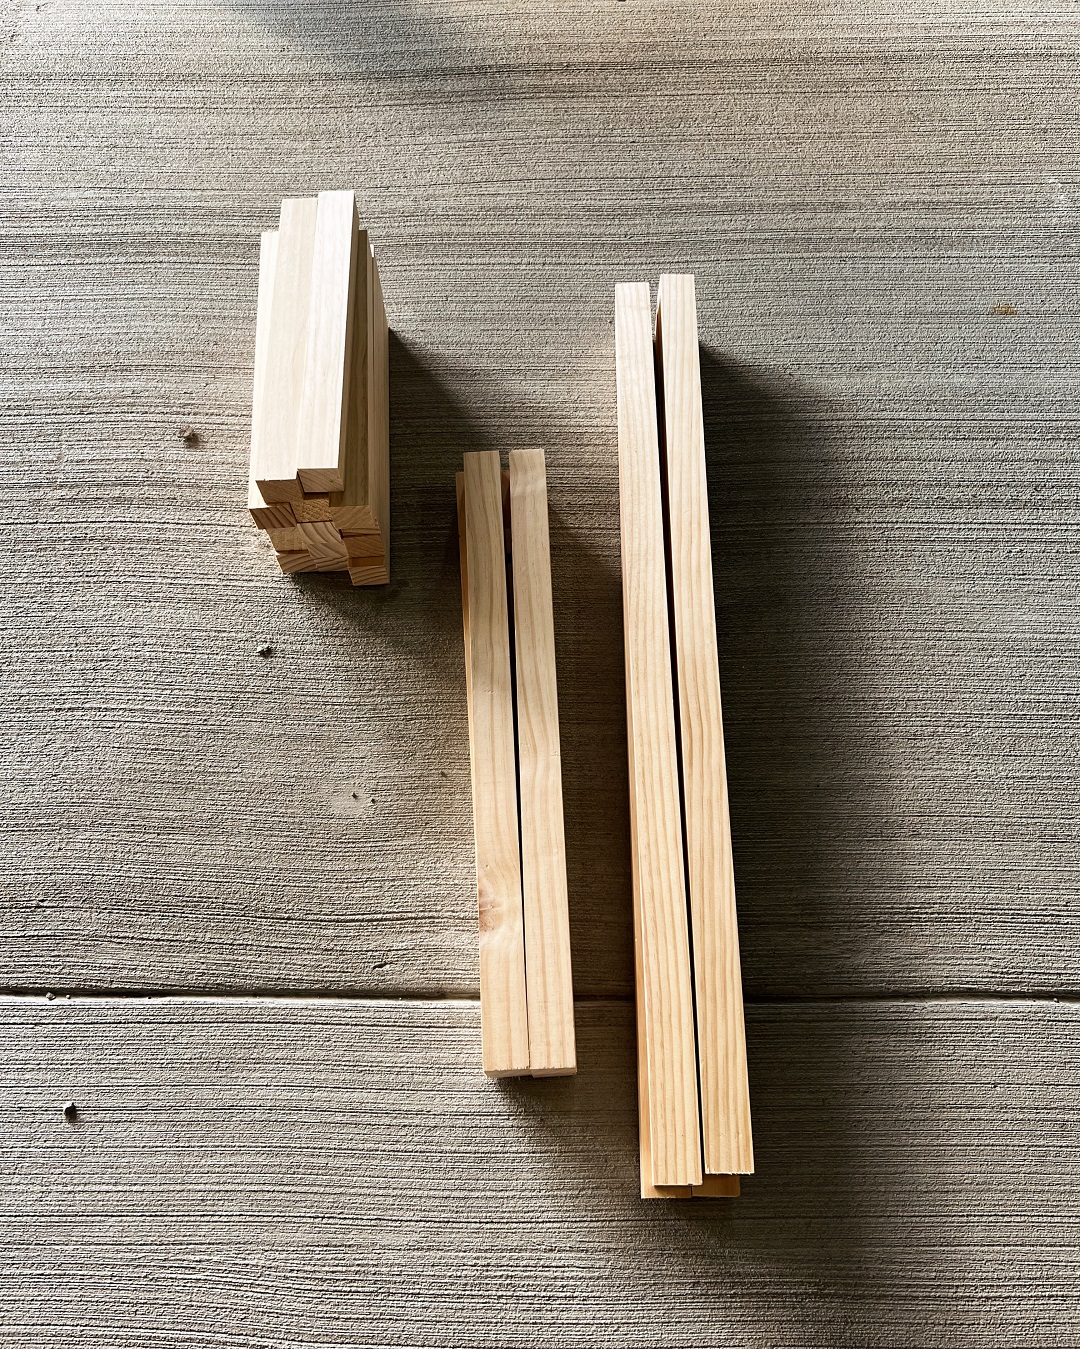 Cut wood for the DIY countertop bar stools